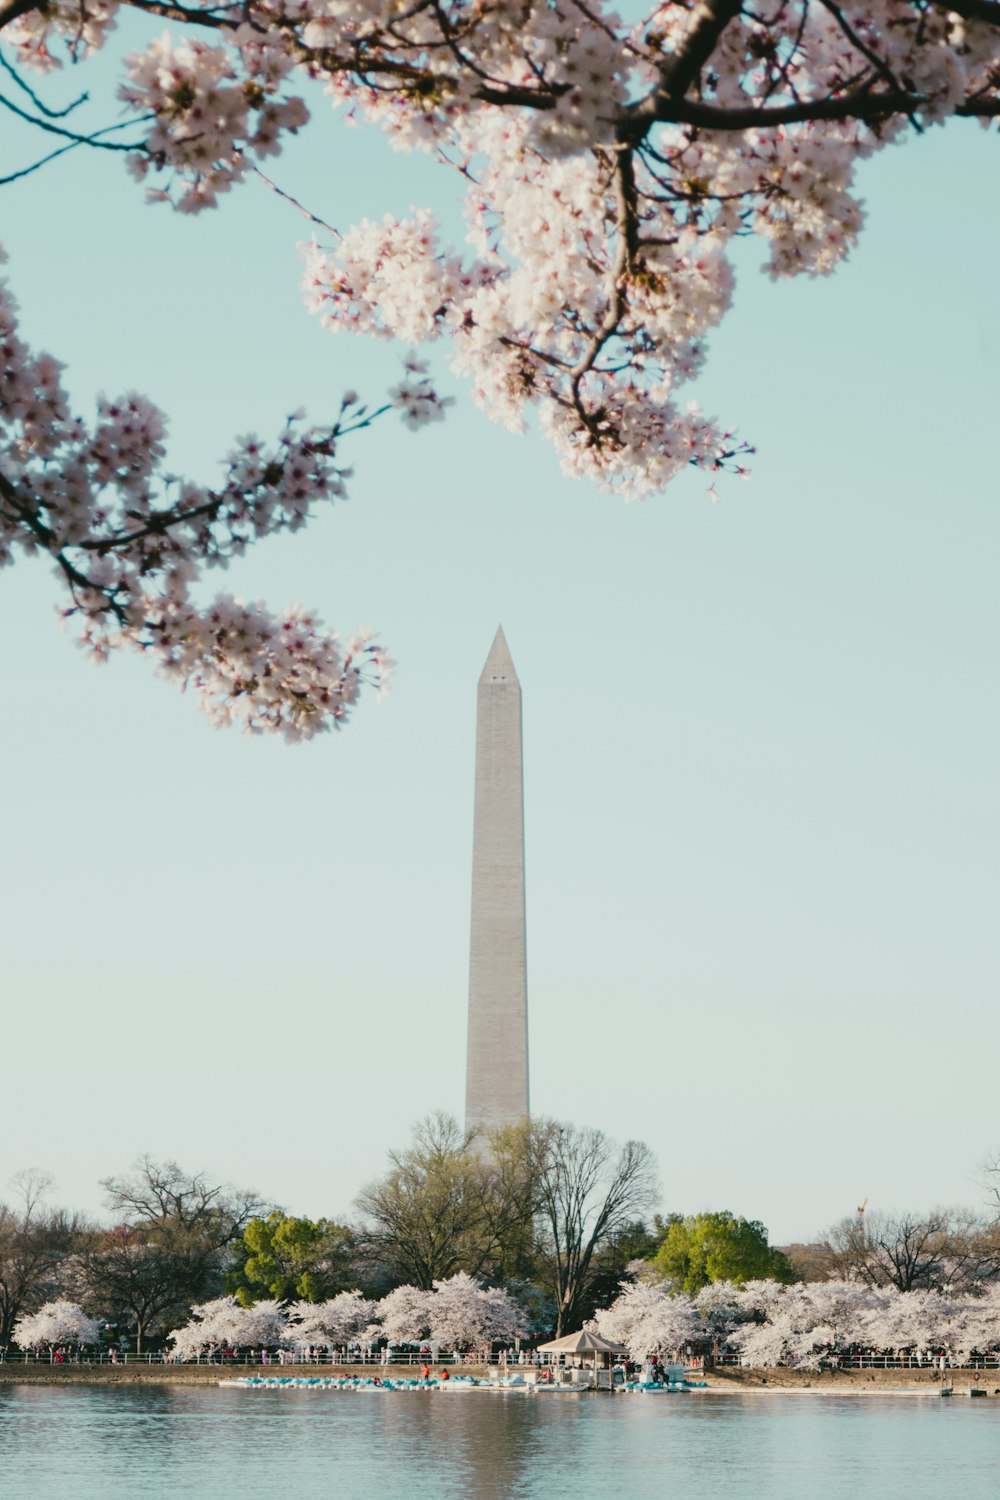 the washington monument and cherry blossom trees in washington dc